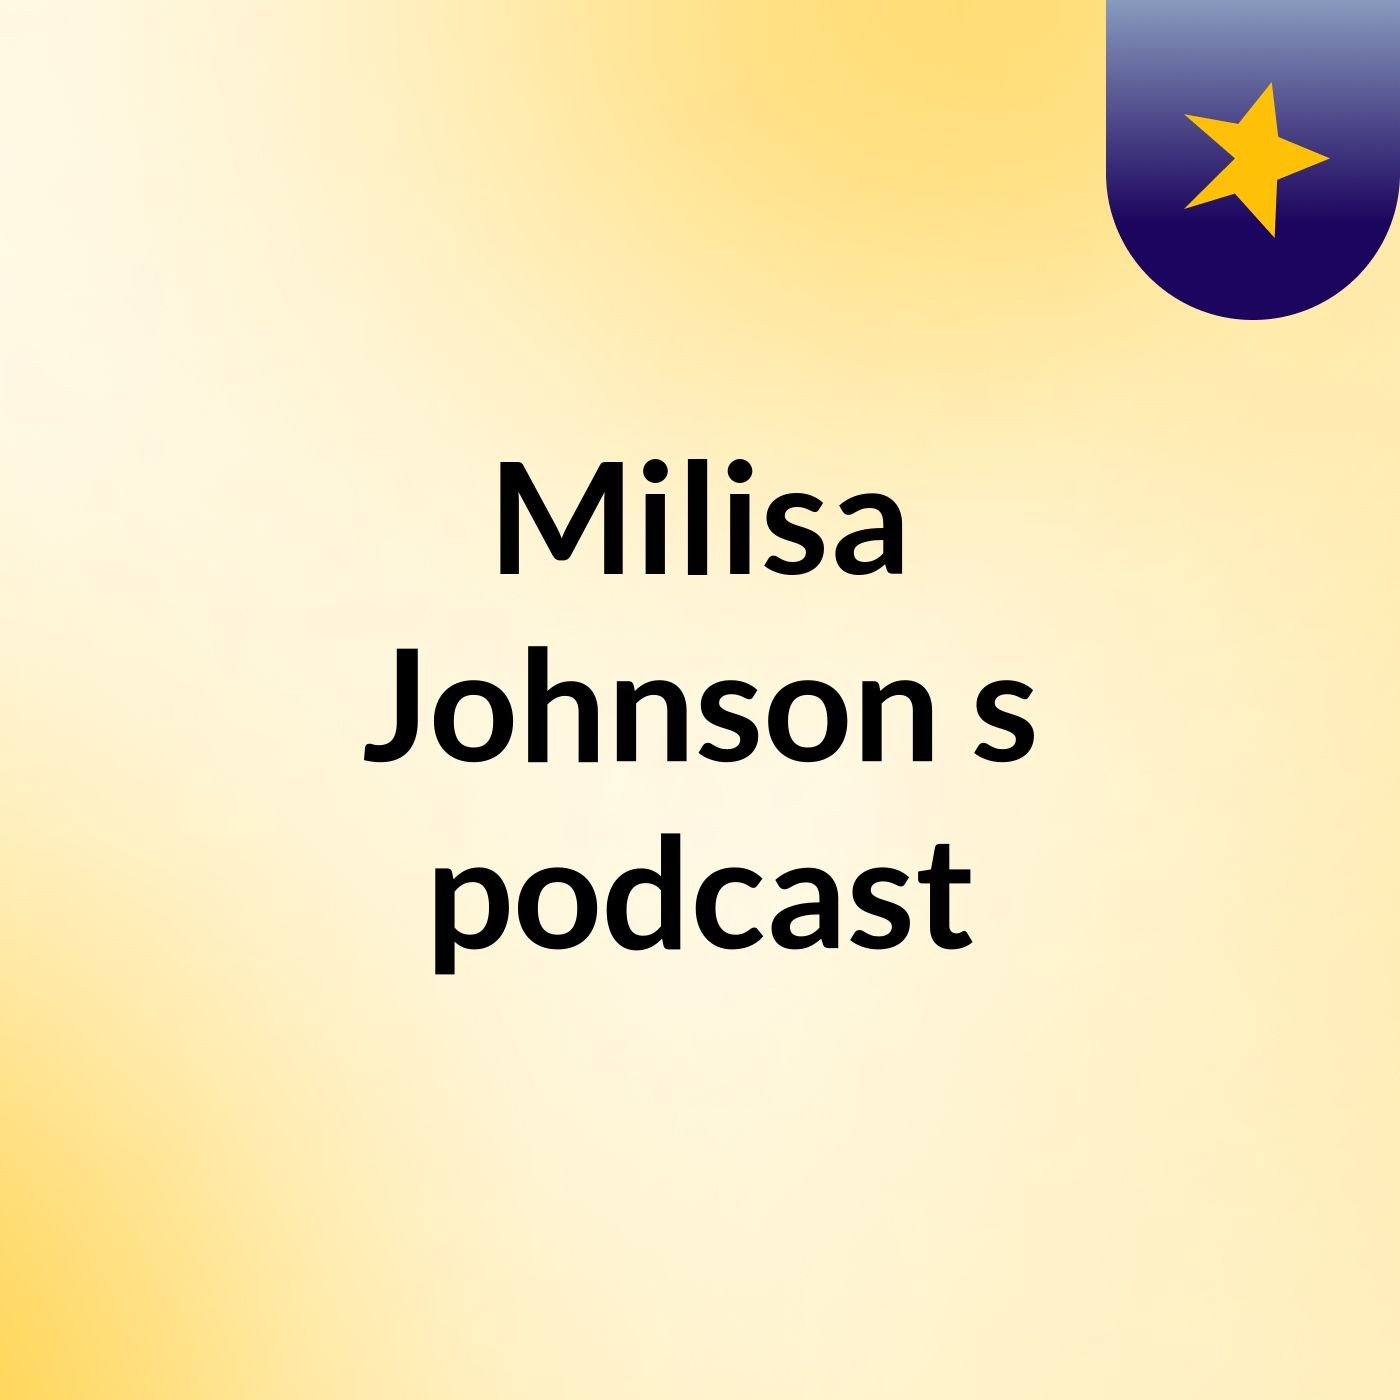 Milisa Johnson's podcast